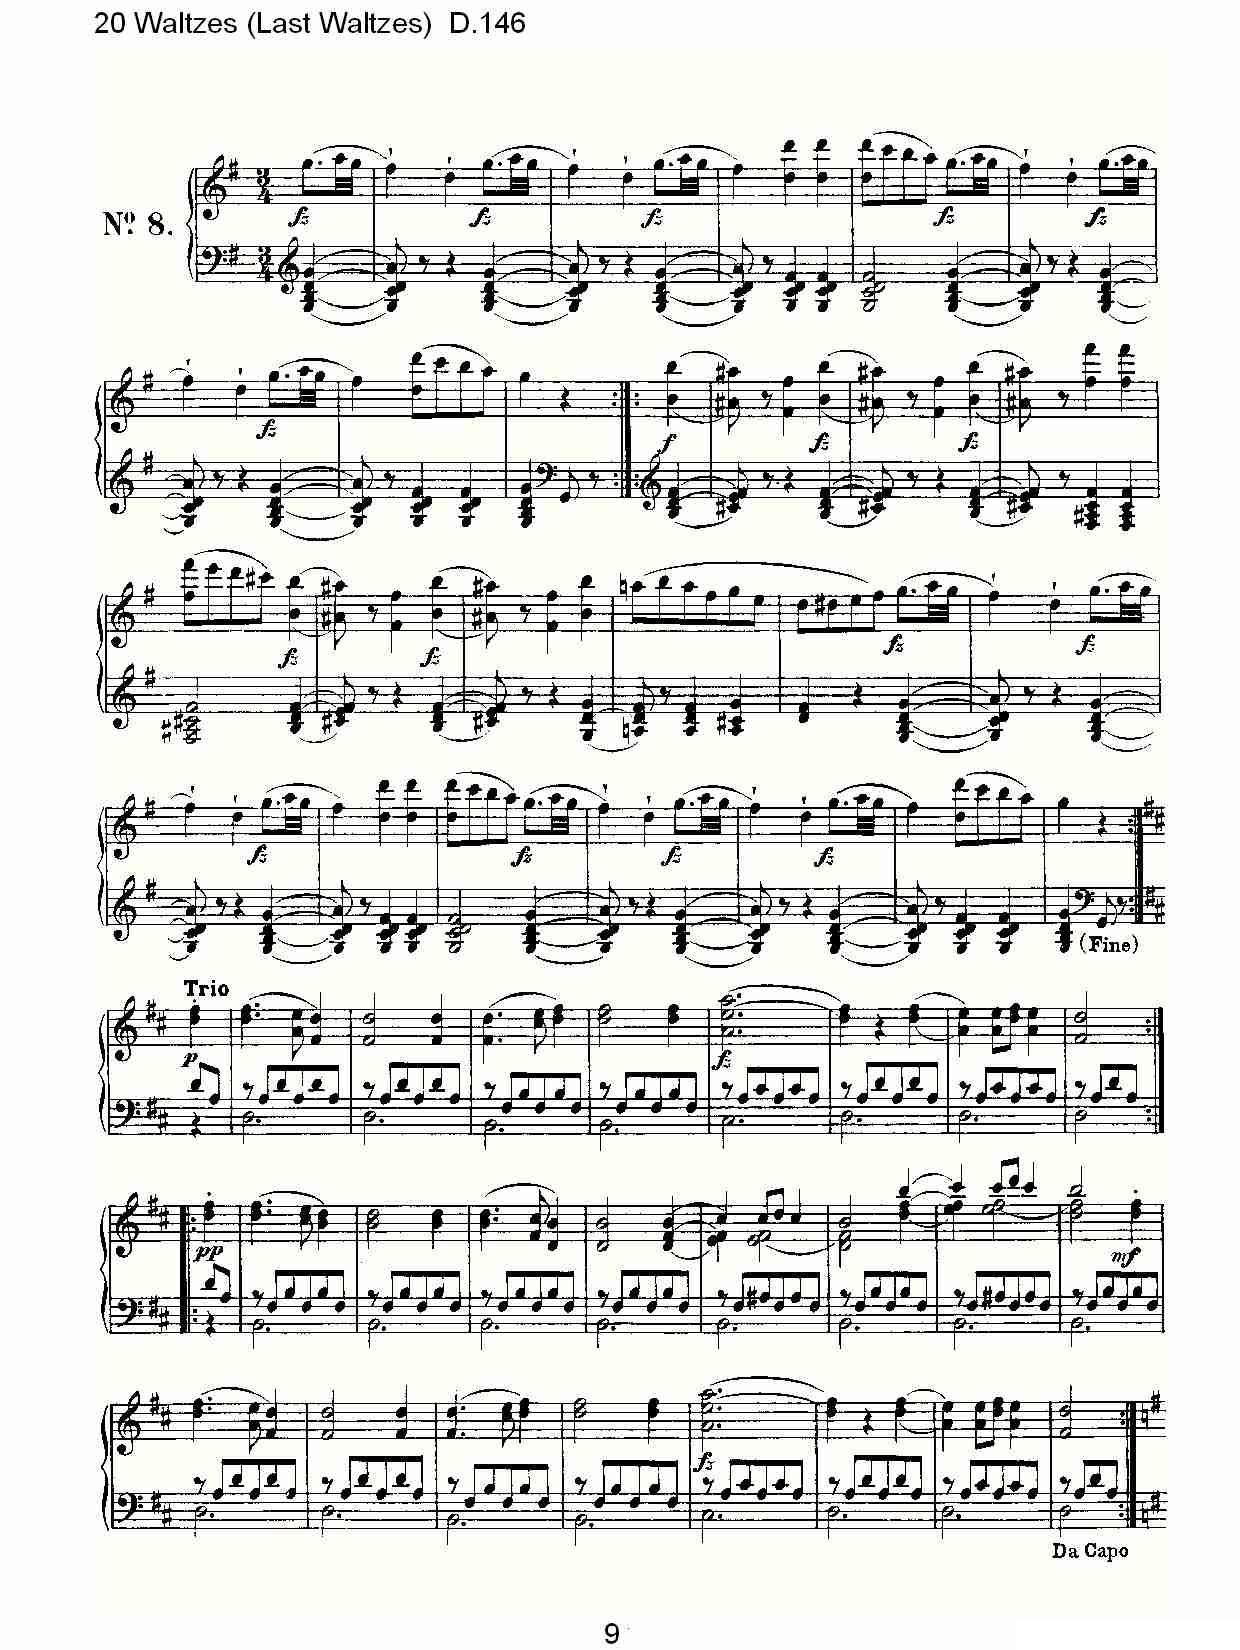 20 Waltzes（Last Waltzes) D.14）钢琴曲谱（图9）